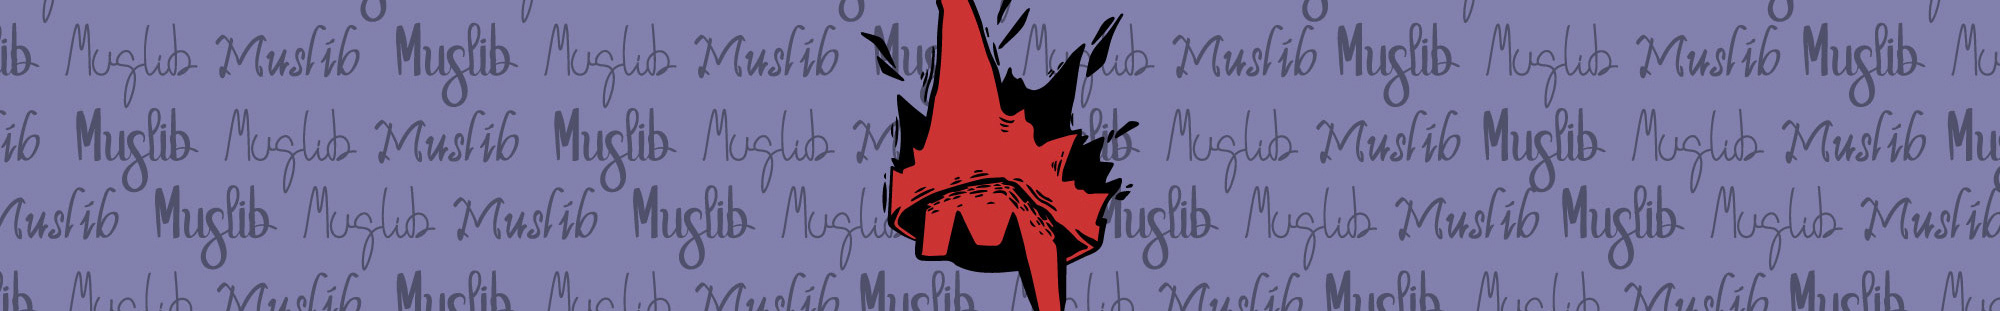 Nico Muslib's profile banner